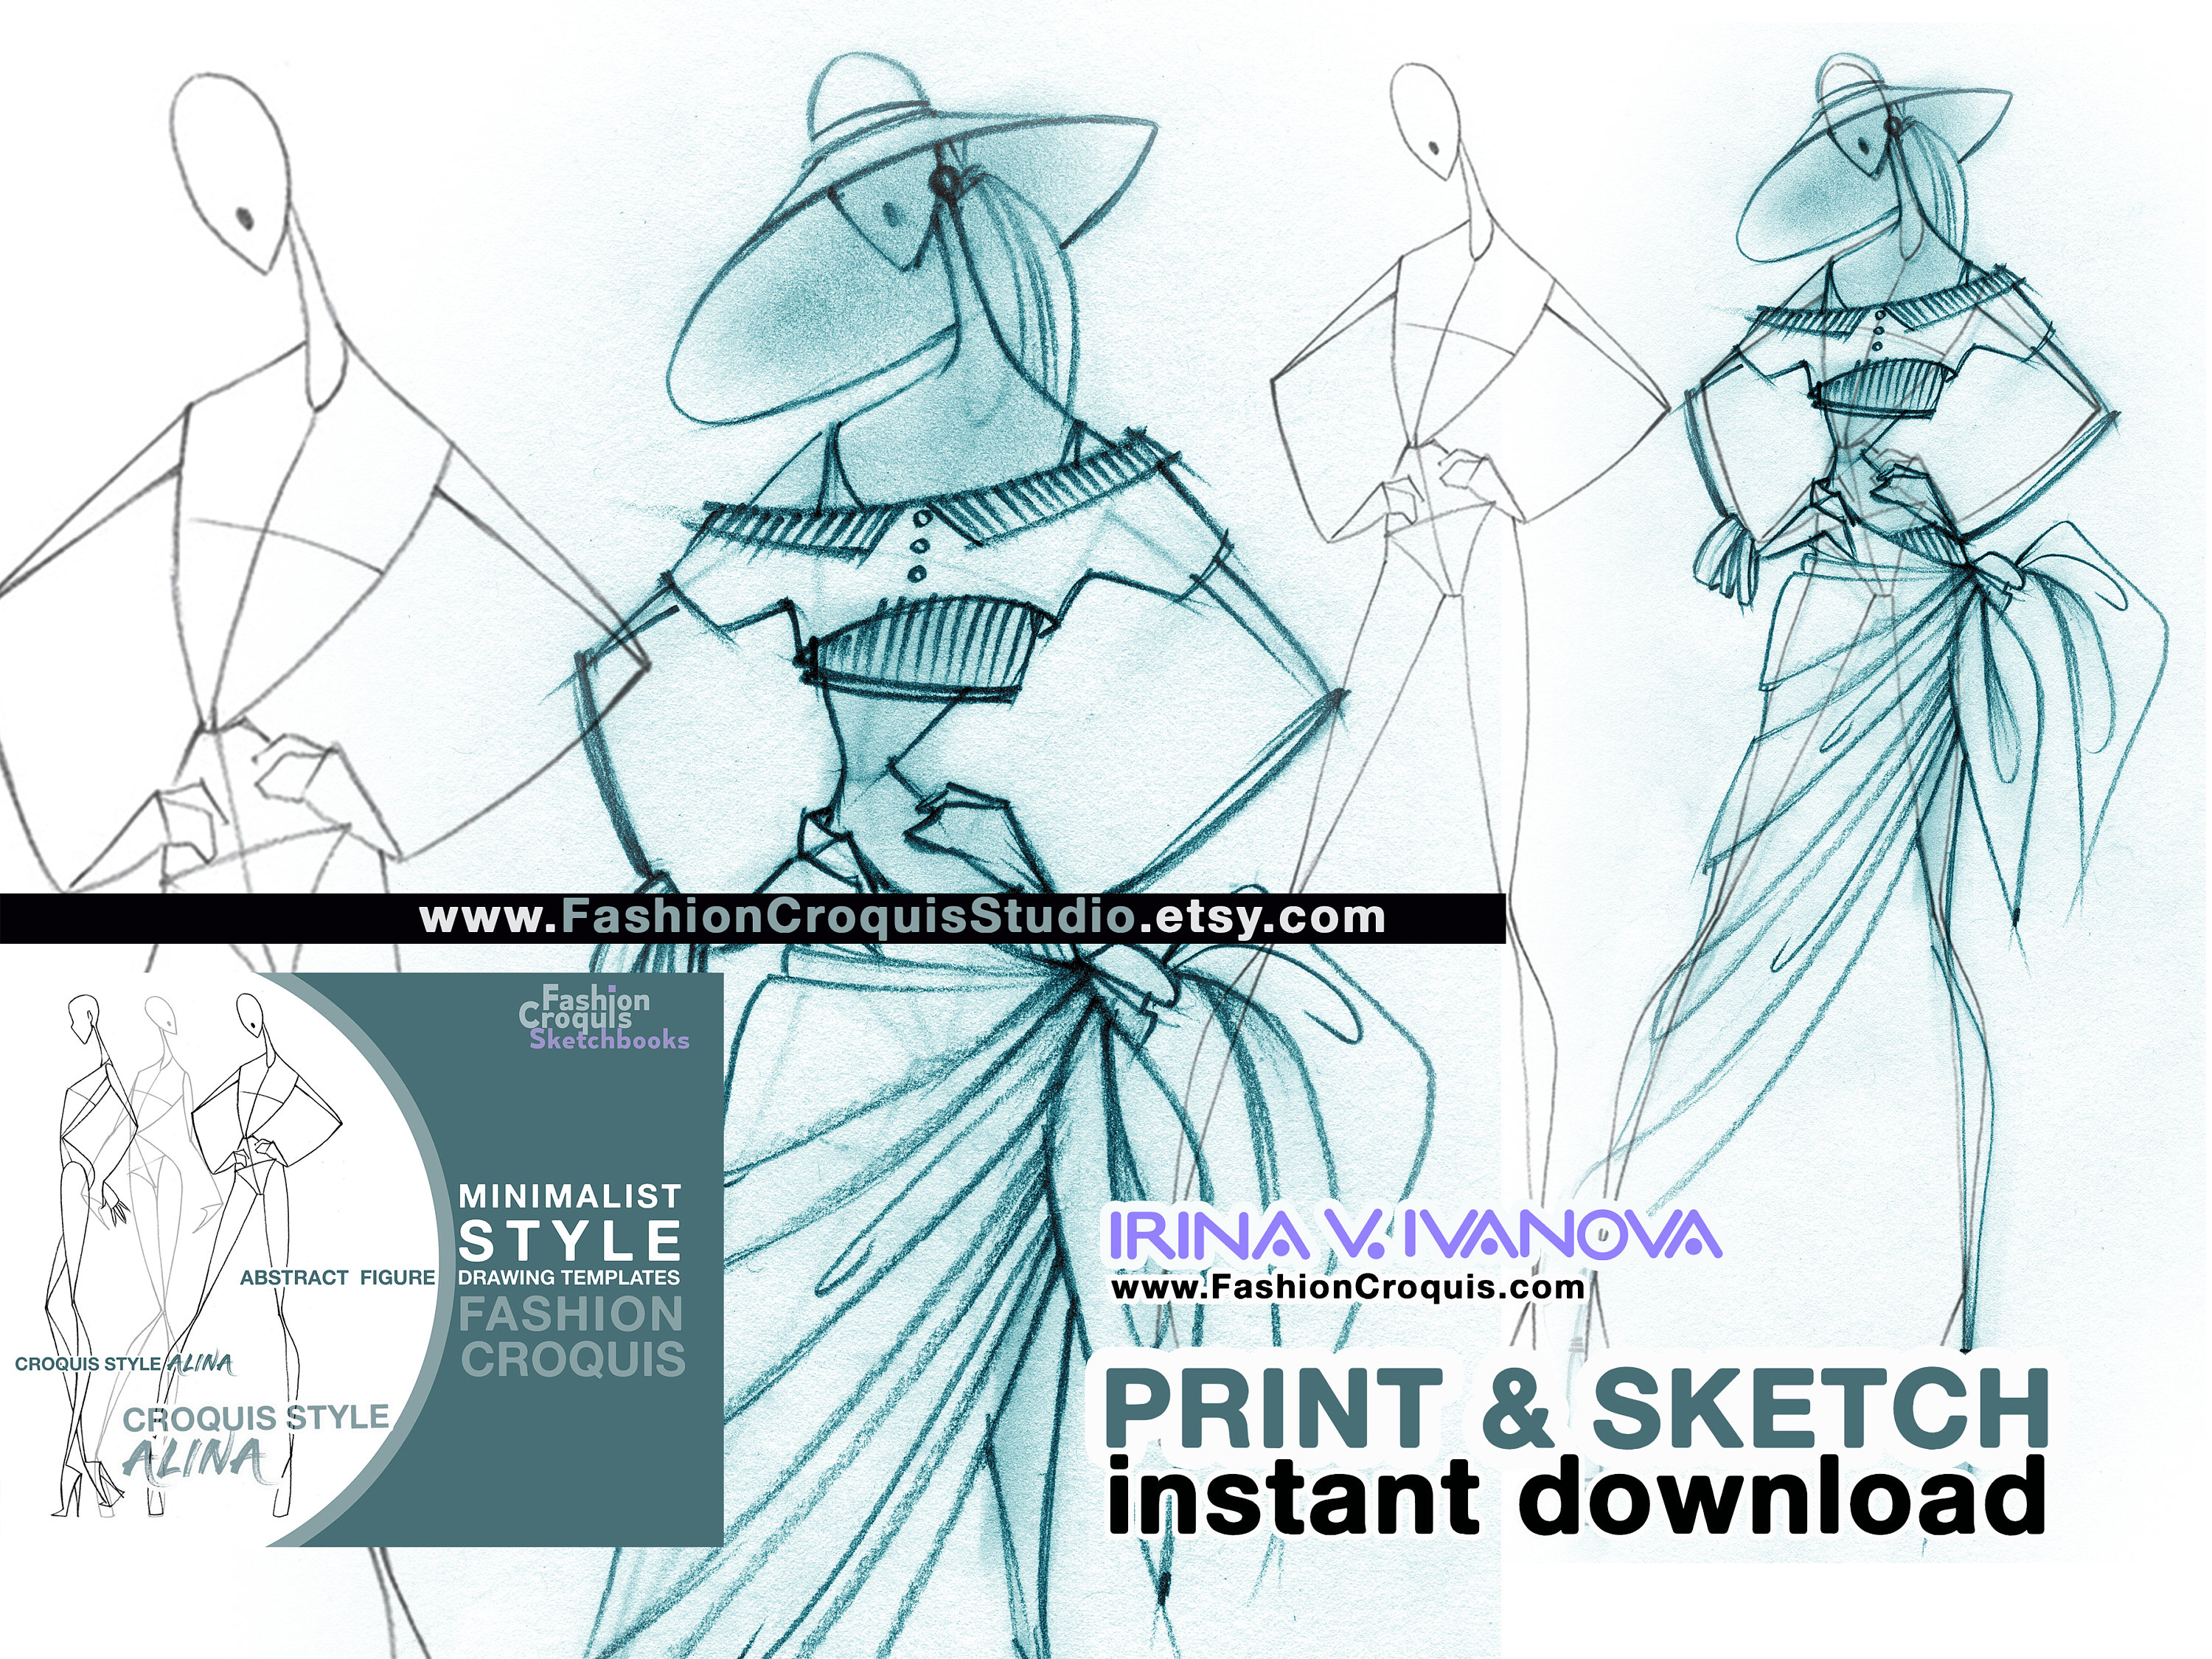 Fashion Design Sketchbook. Photoshoot Poses: Women's Wear Fashion Illustration Templates